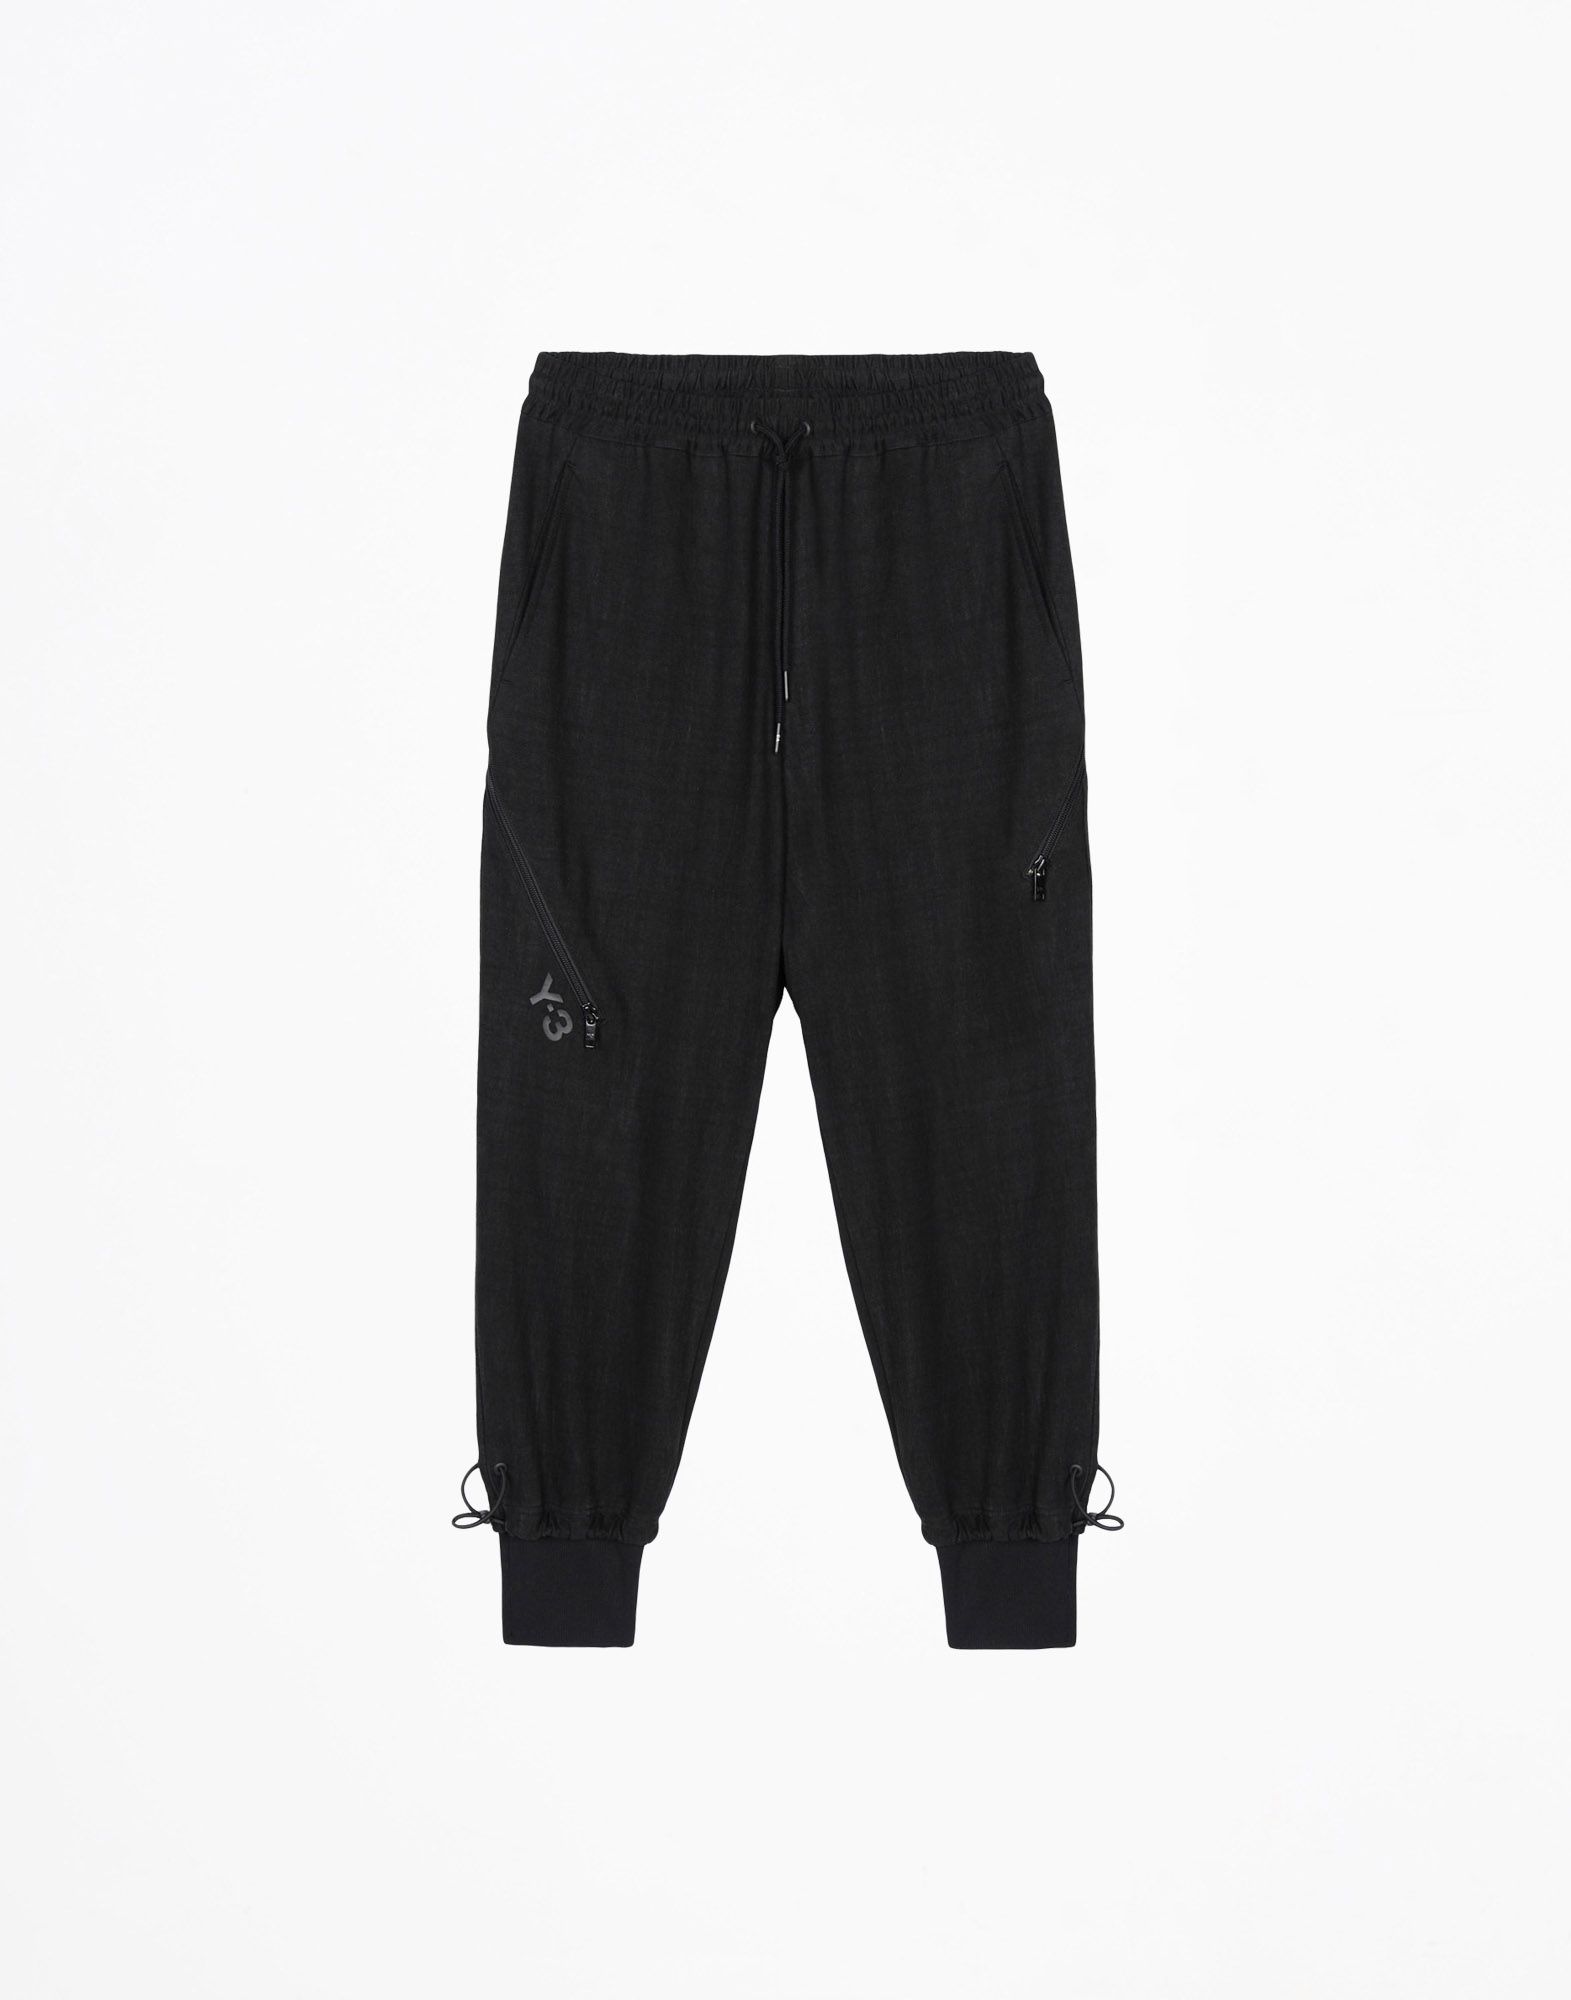 Y 3 GRAIN JERSEY PANT ‎ ‎Casual Pants‎ ‎ ‎ | Adidas Y-3 Official Site